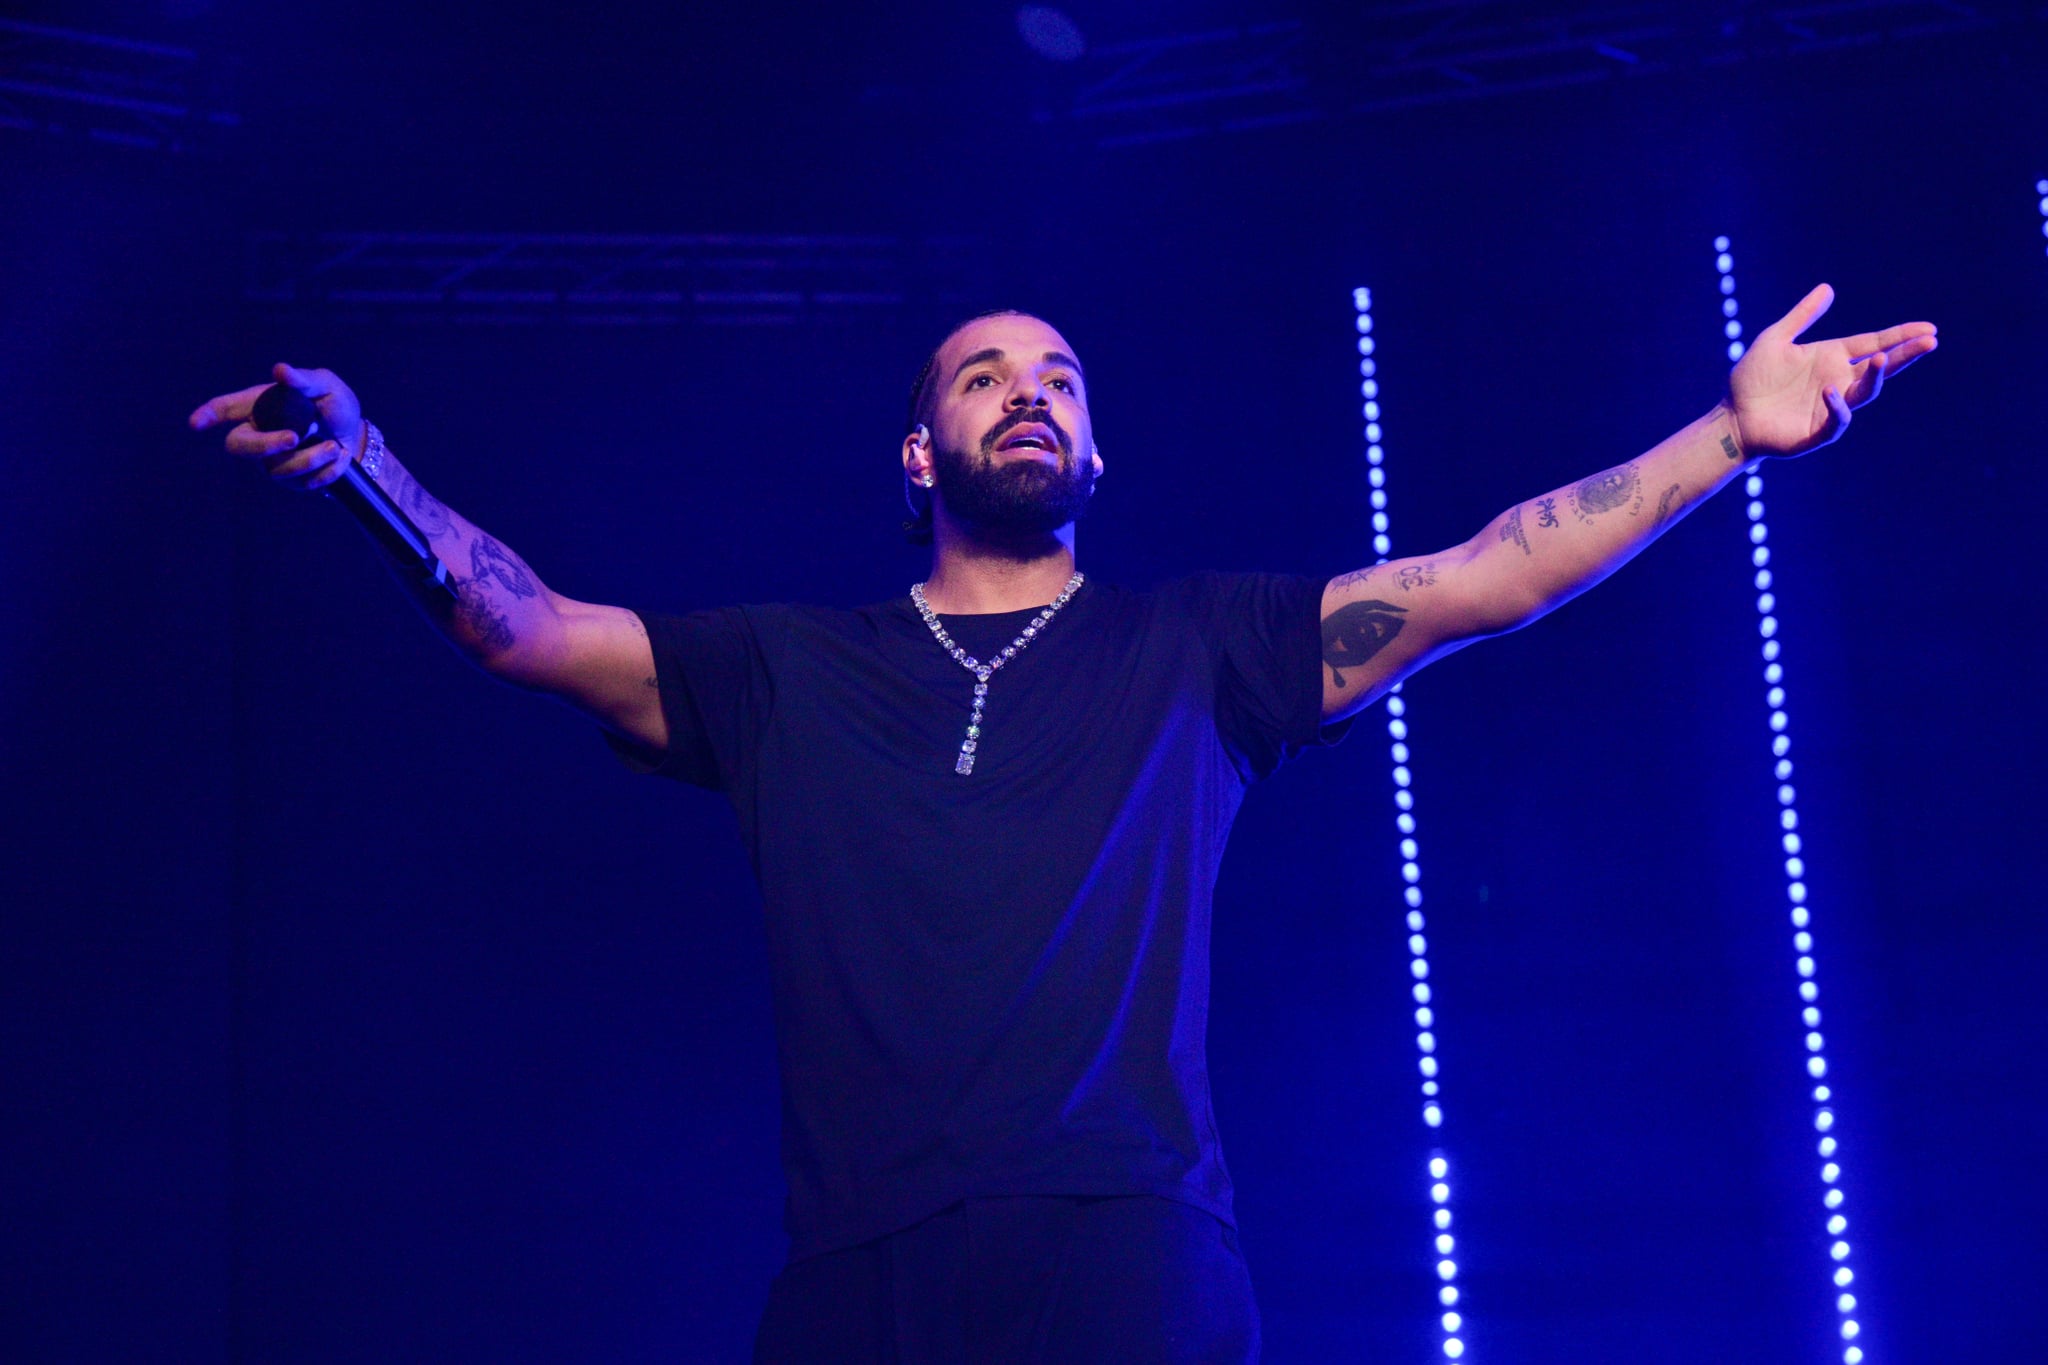 ATLANTA, GA - DECEMBER 9: Rapper Drake performs onstage during 